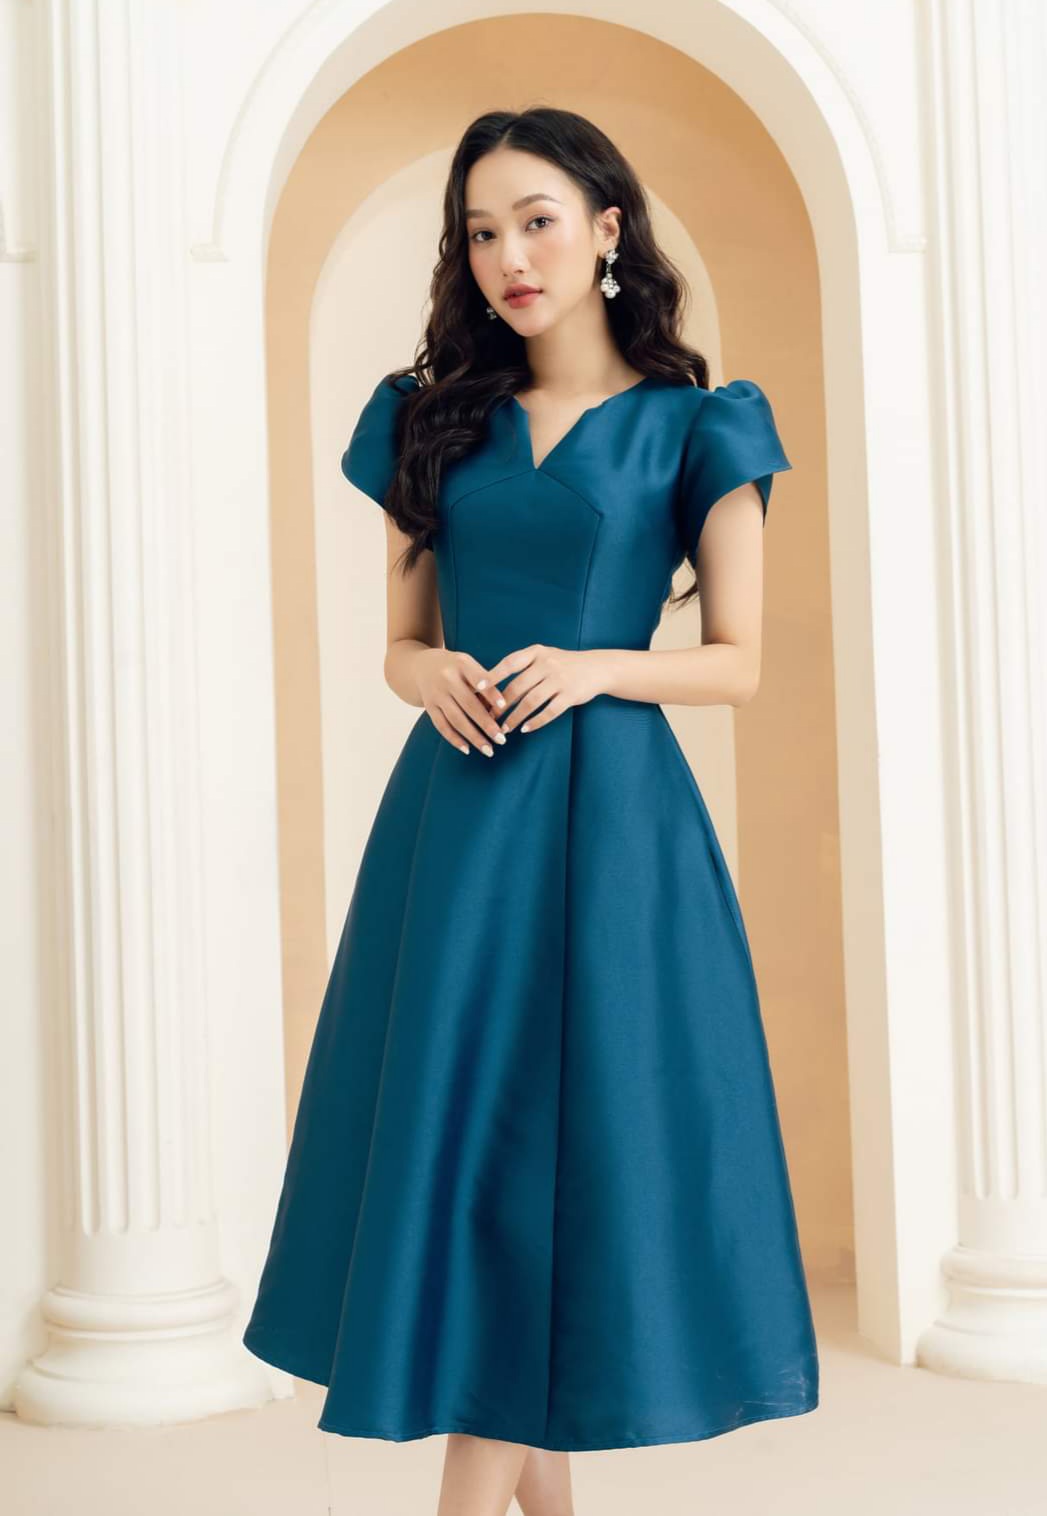 Váy xanh cổ vịt đính hoa eo v2970-dolce viva collection